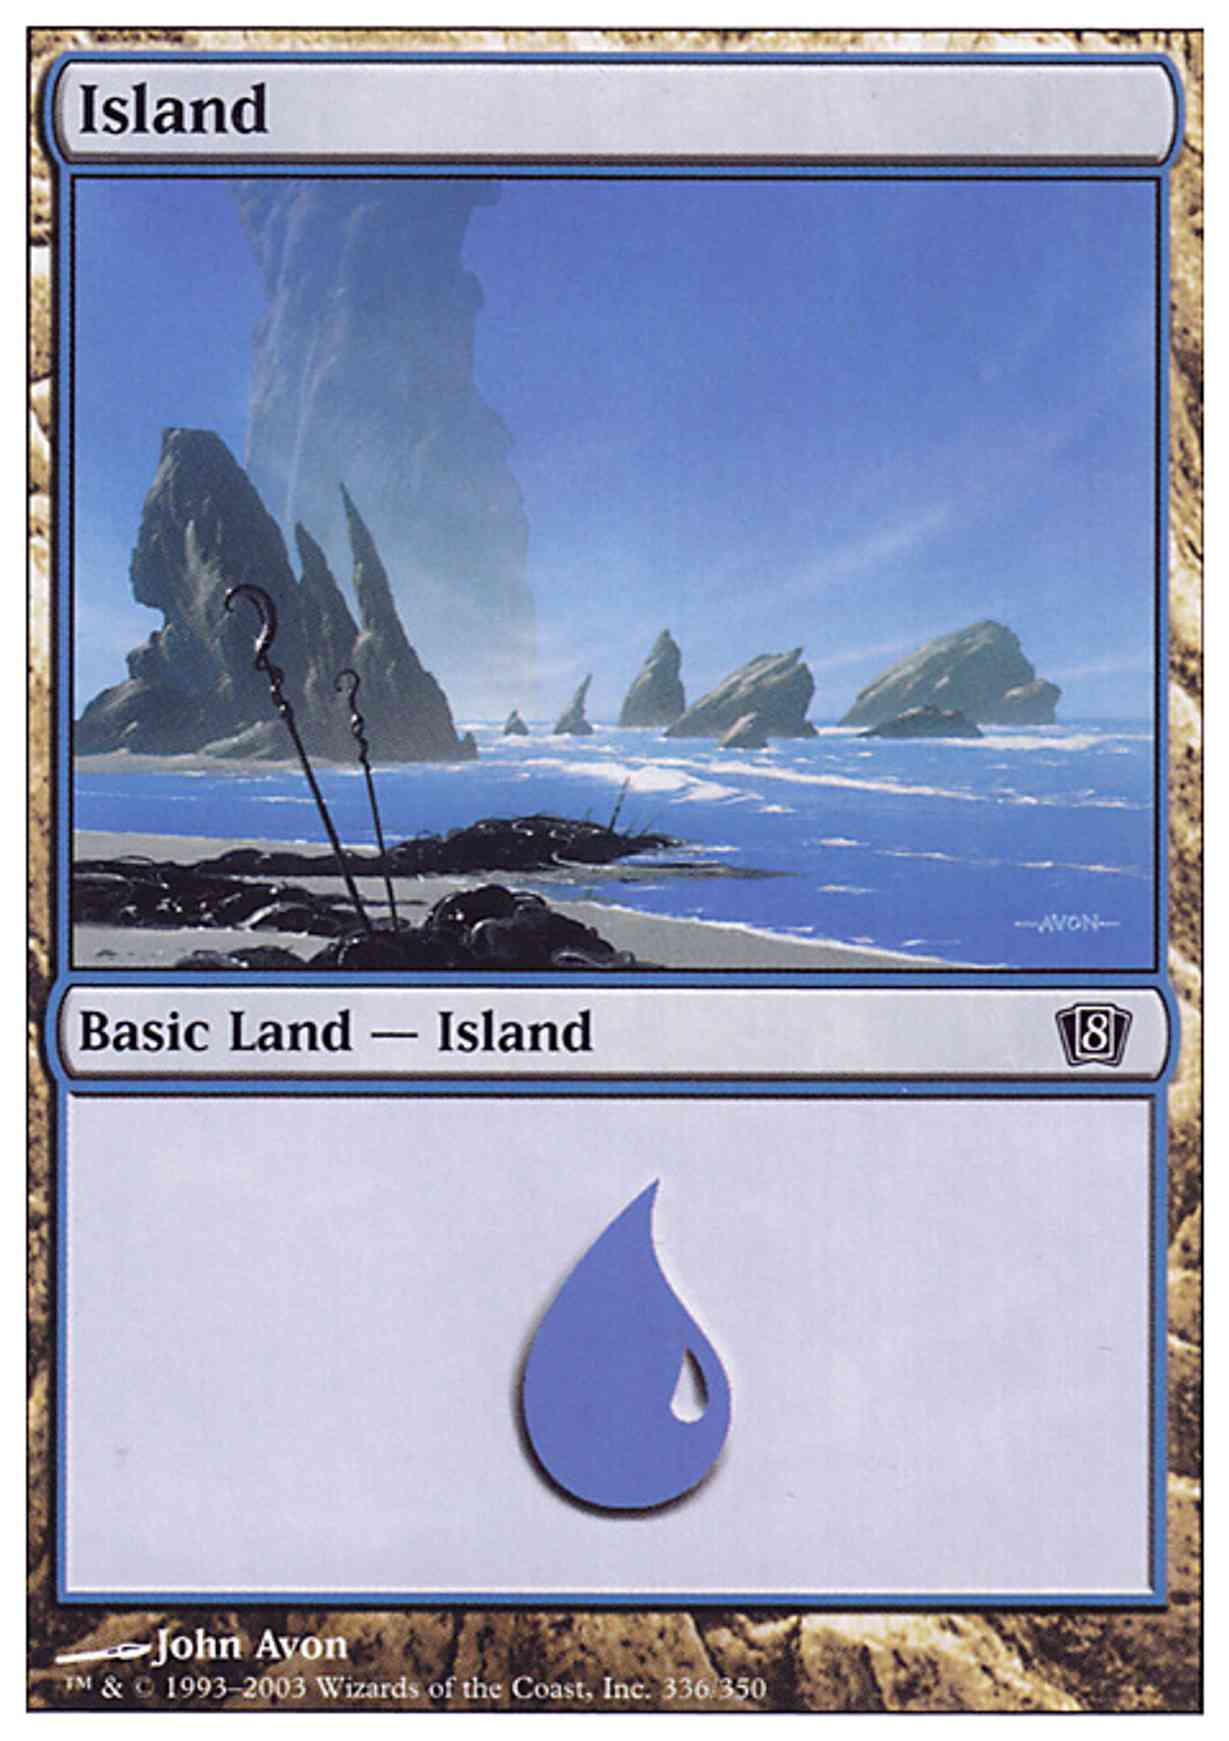 Island (336) magic card front